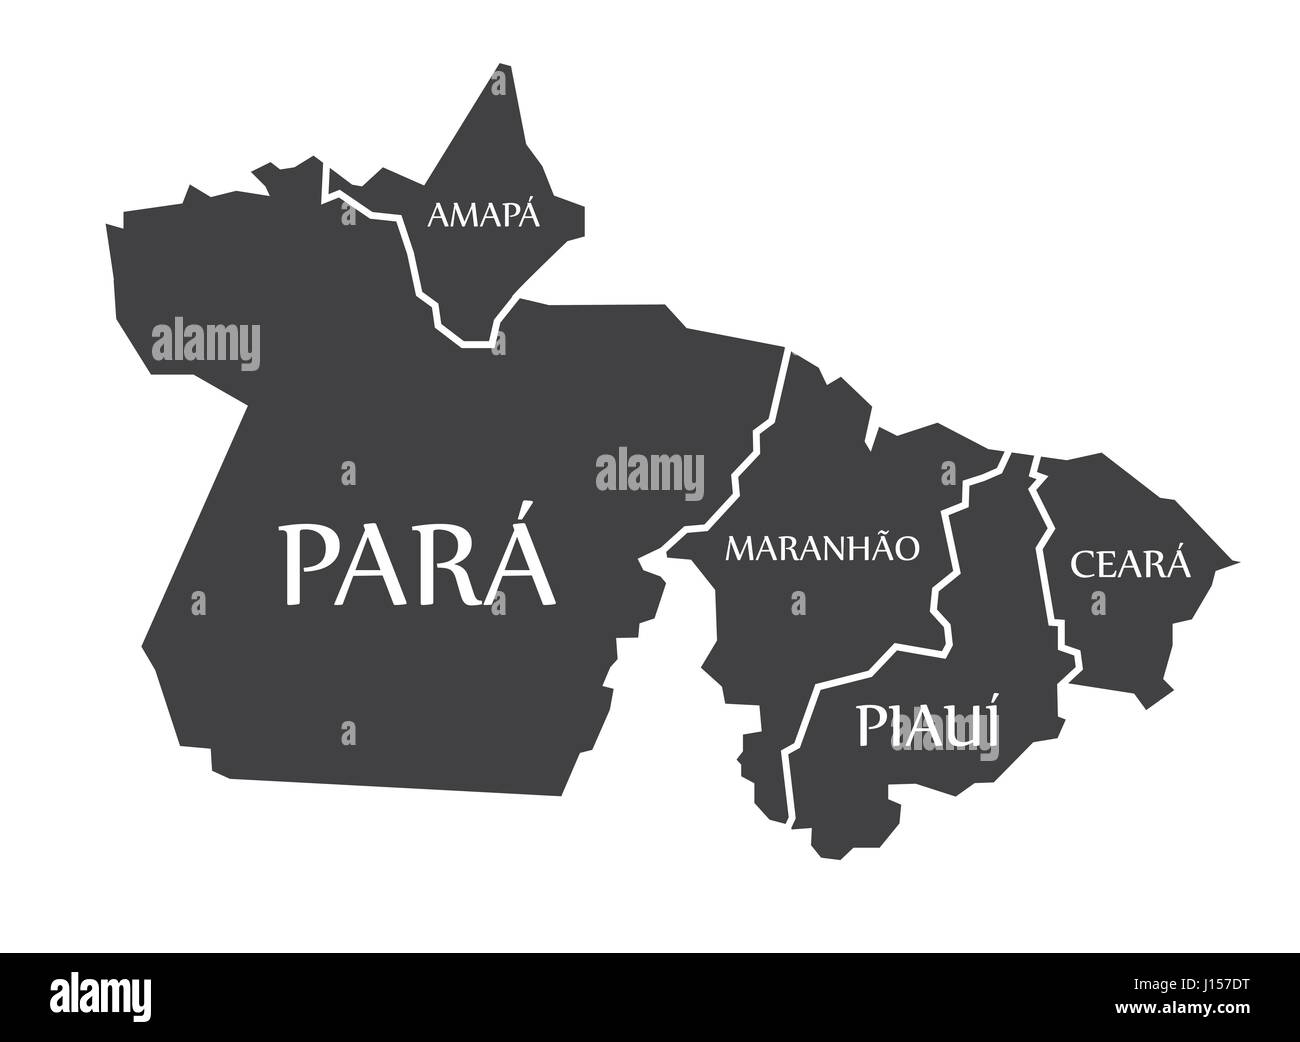 Amapa - Para - Maranhao - Piaui - Ceara Map Brazil illustration Stock Vector